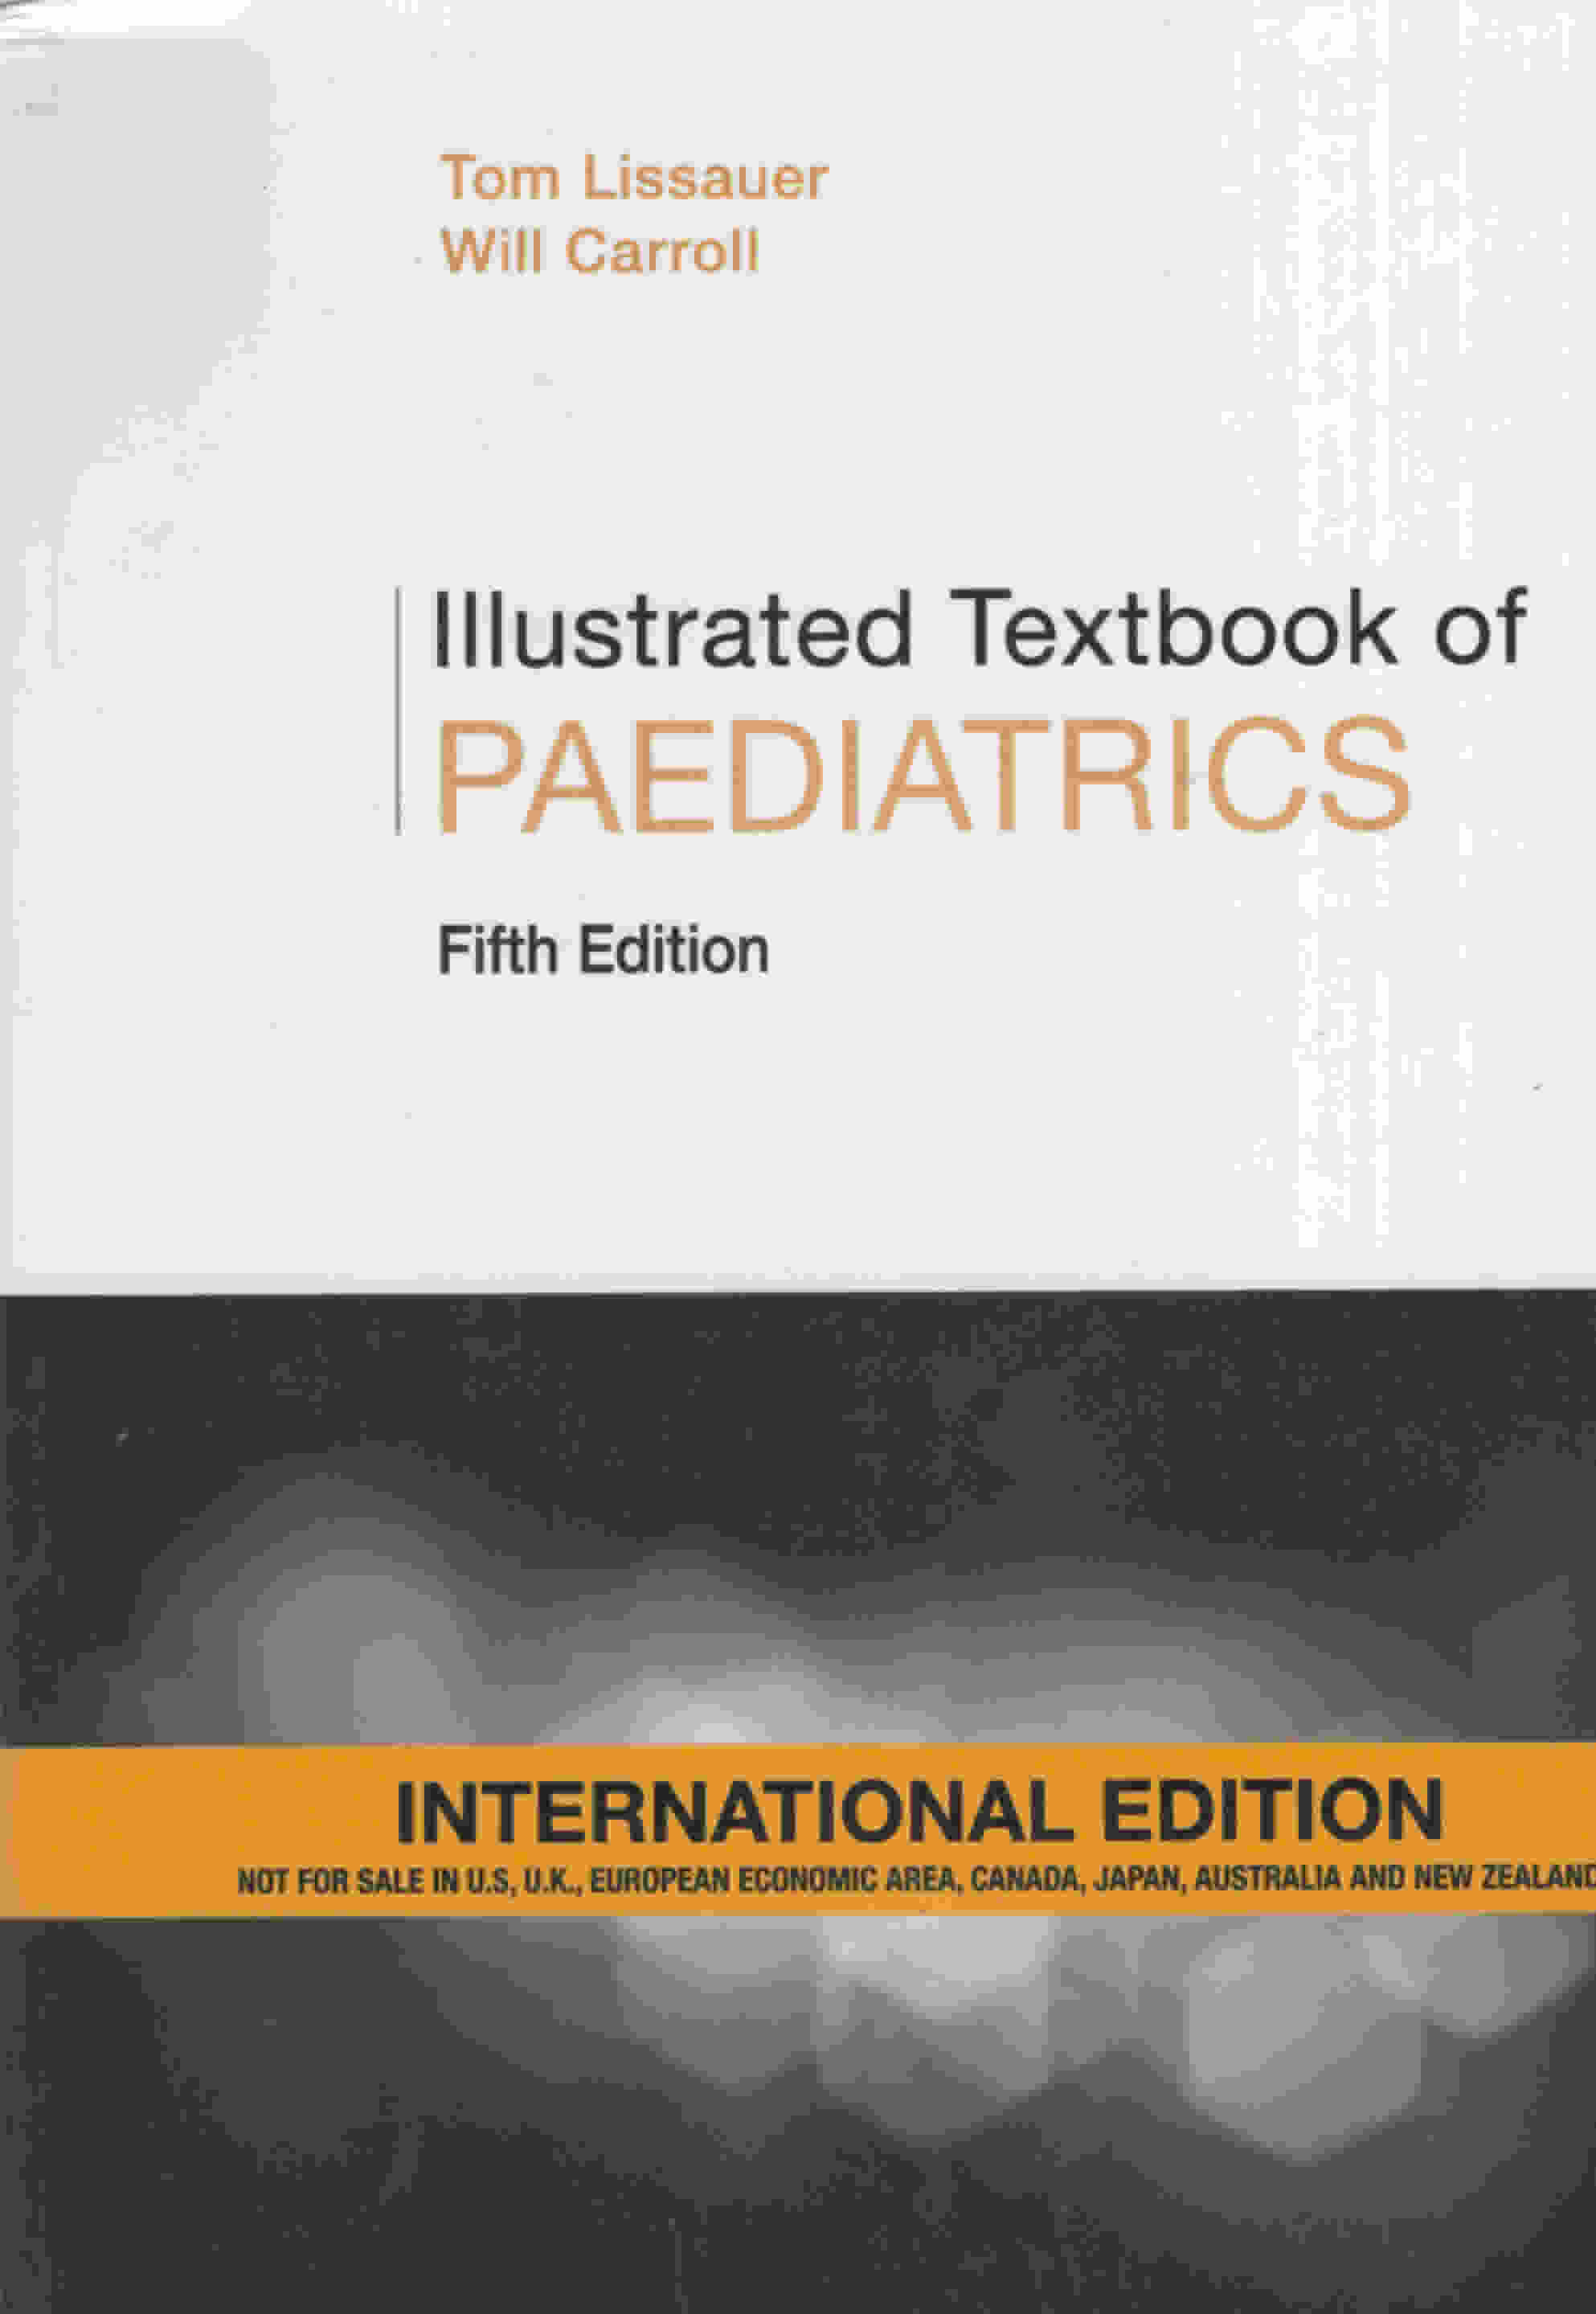 ILLUSTRATED TEXTBOOK OF PAEDIATRICS -FIFTH EDITION